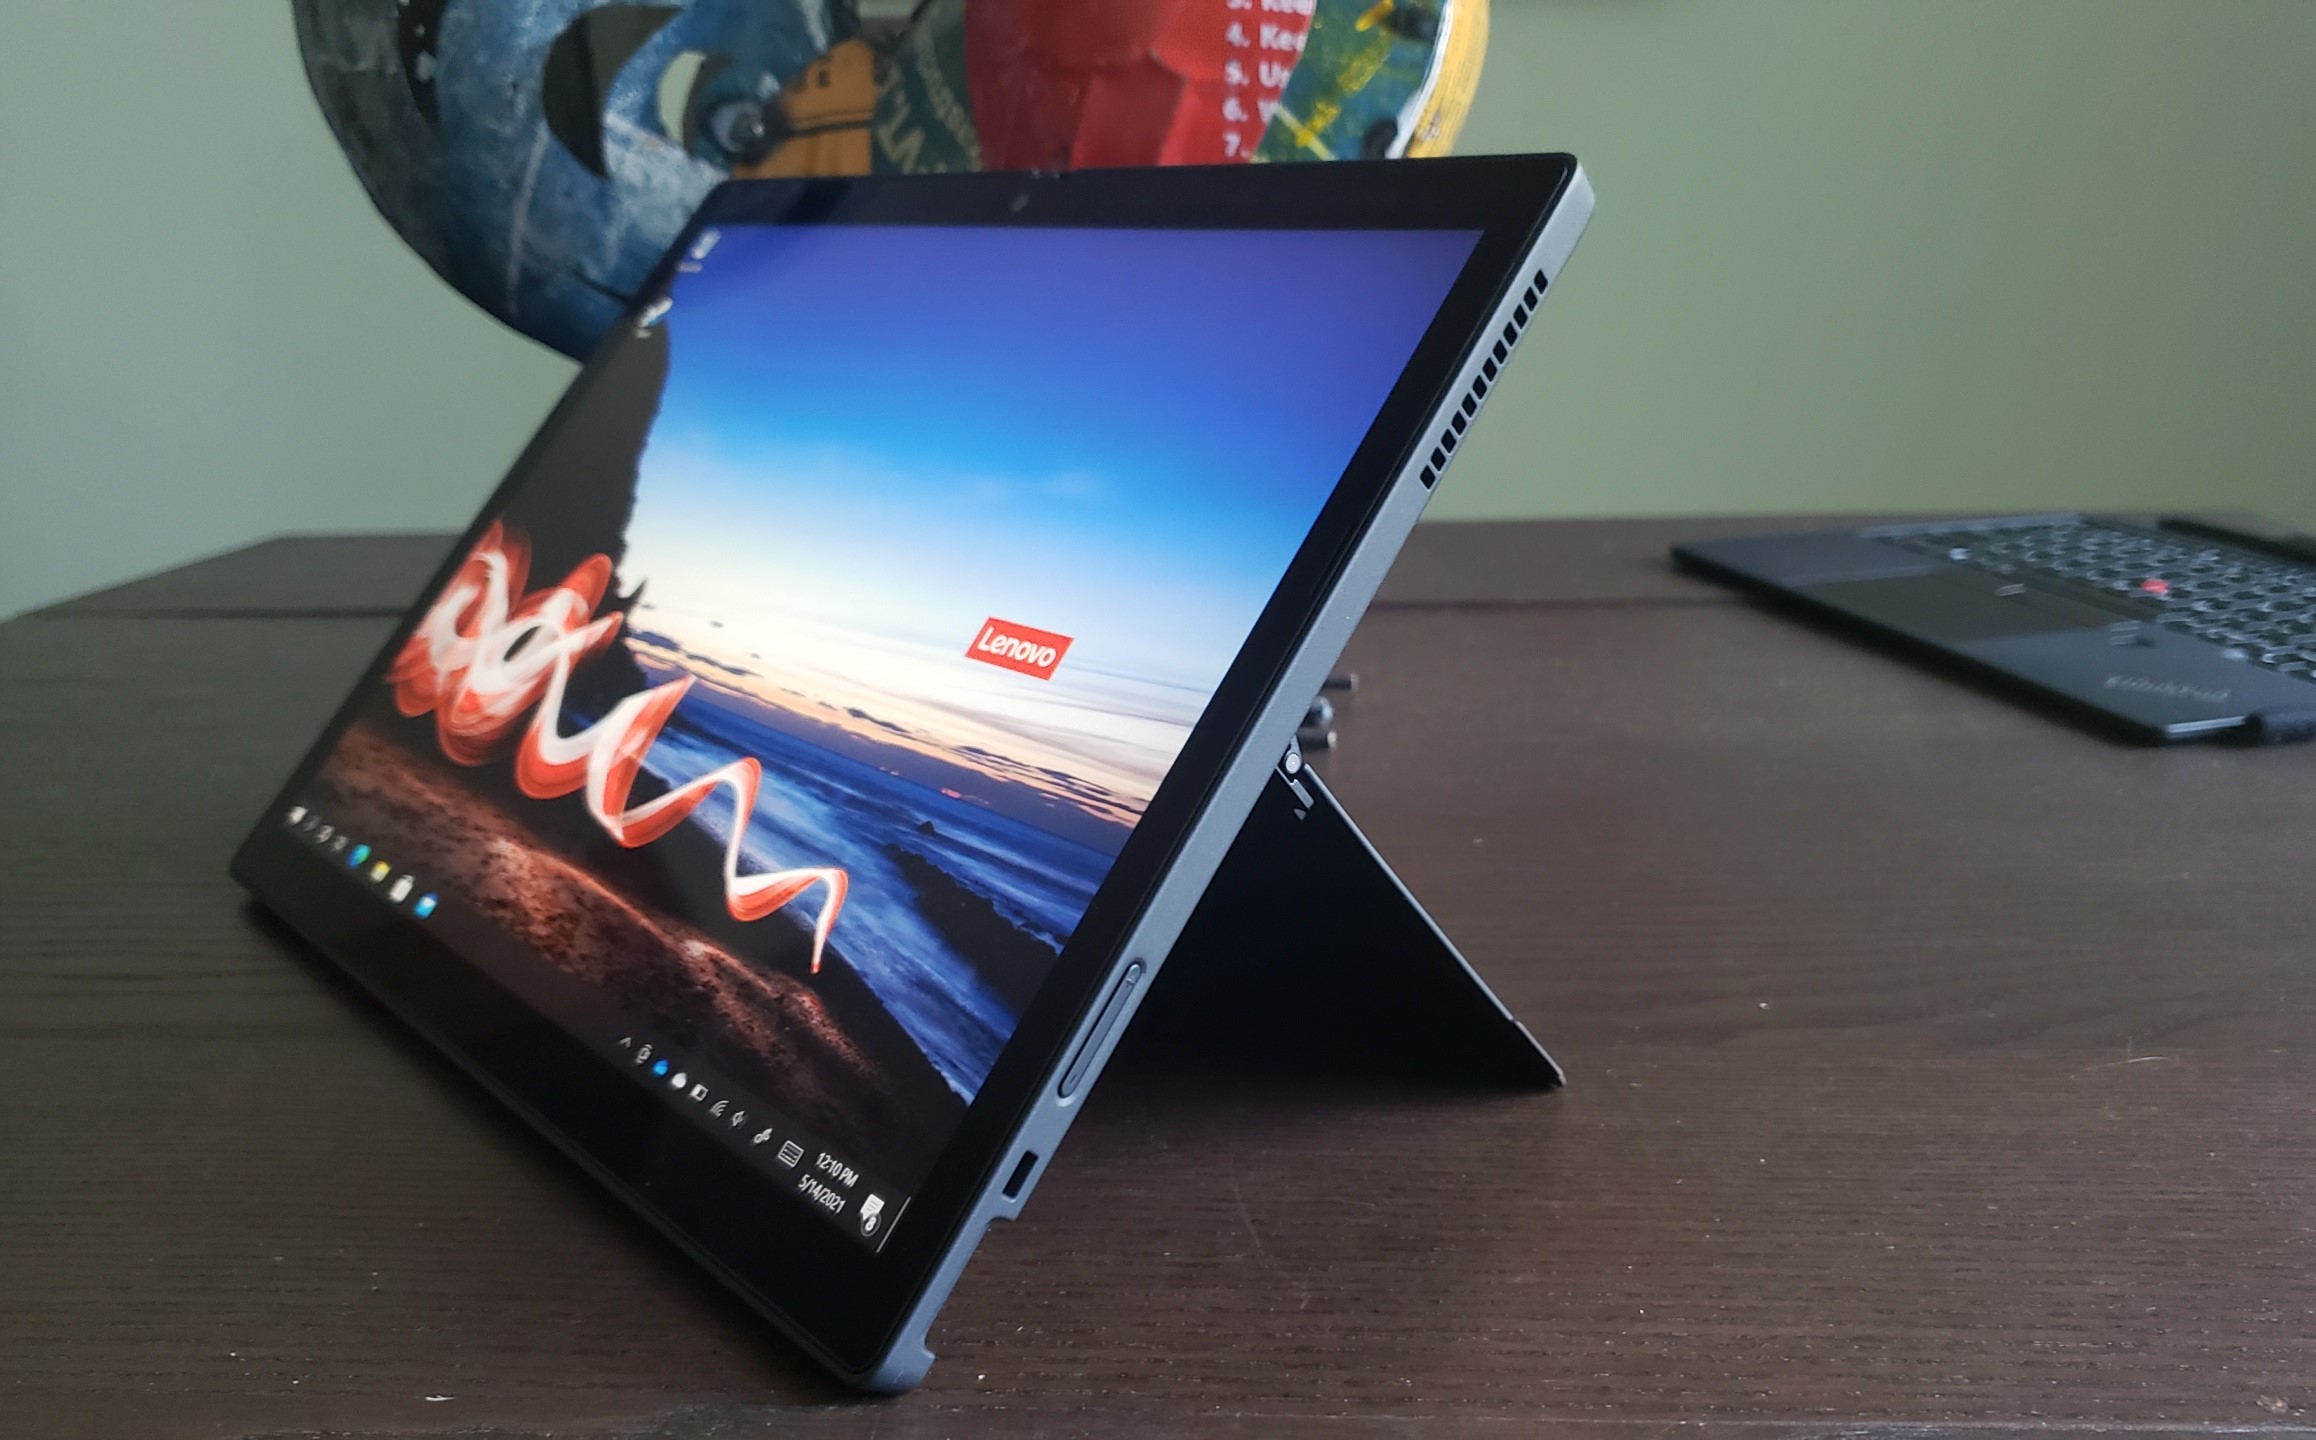 Review: Lenovo ThinkPad Tablet 2